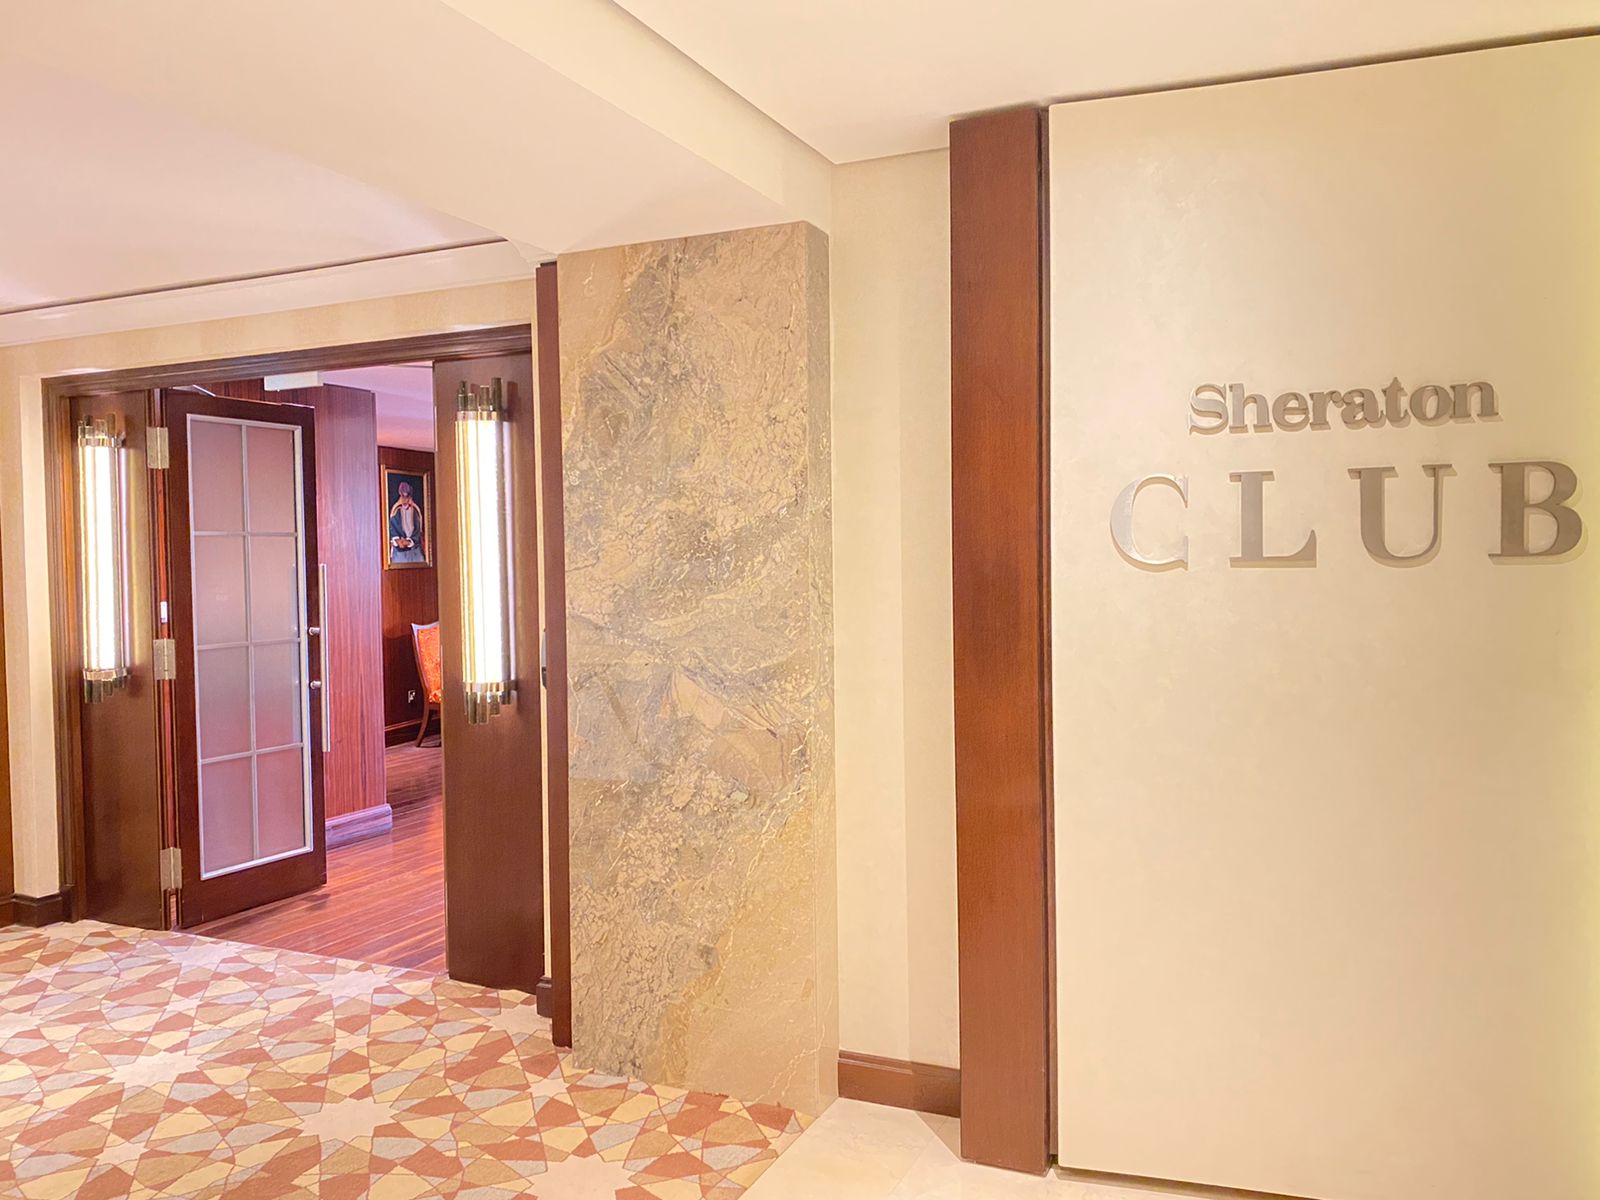 Sheraton Oman Executive Club Lounge Entrance